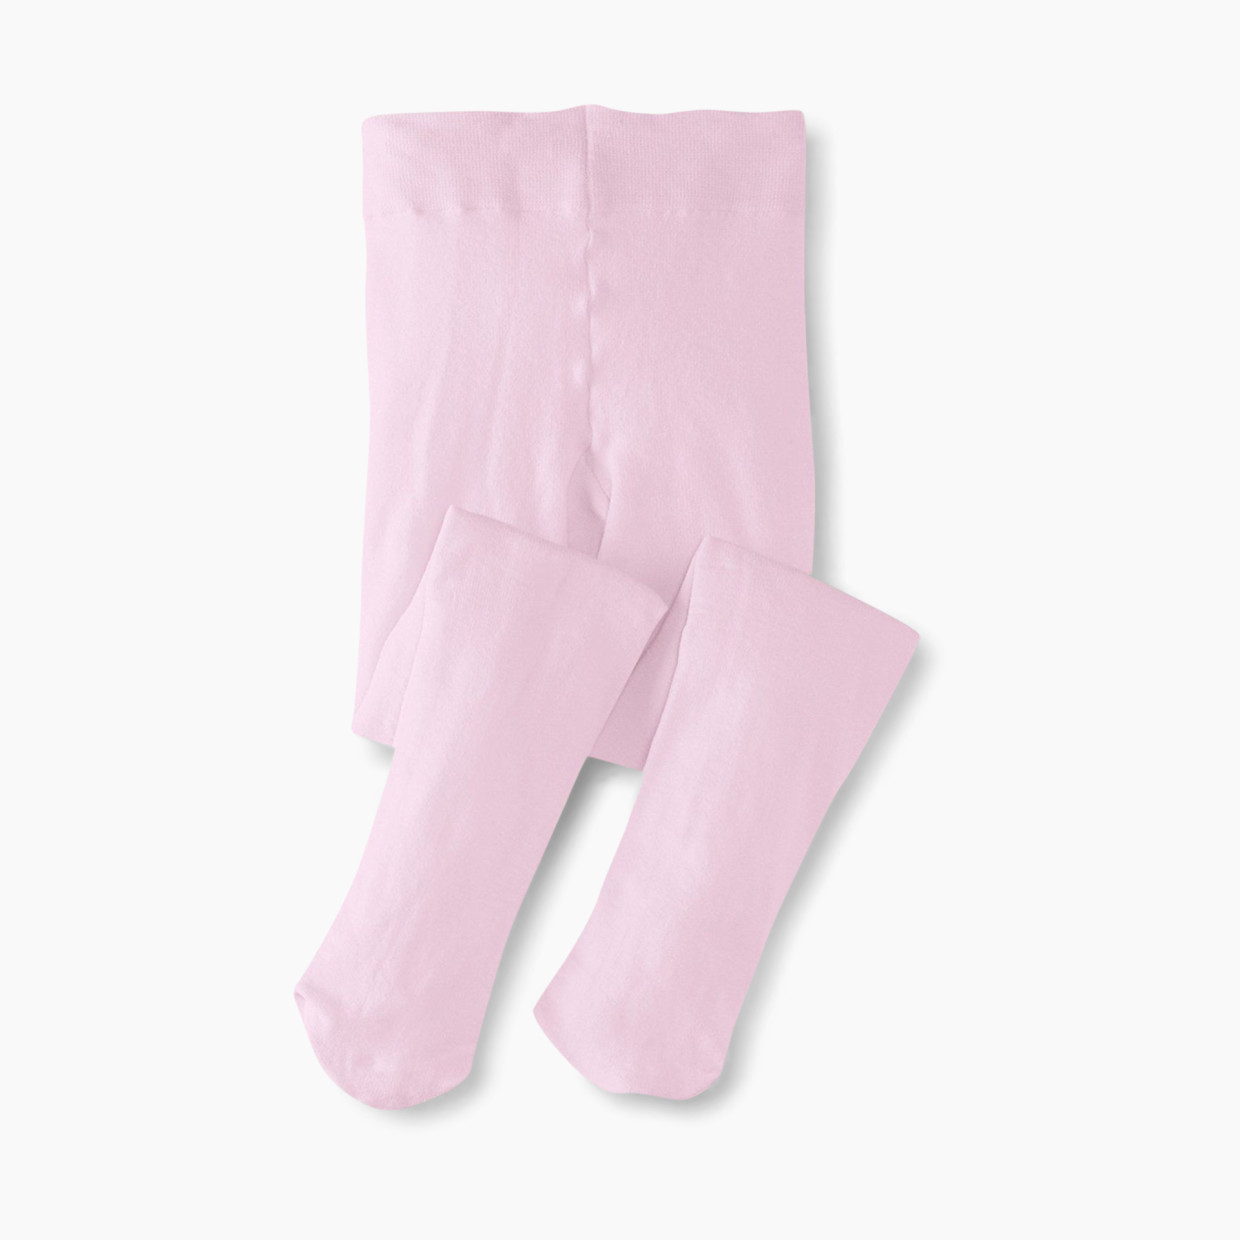 Jefferies Socks Pima Cotton Tights - Light Pink, 0-6 Months.